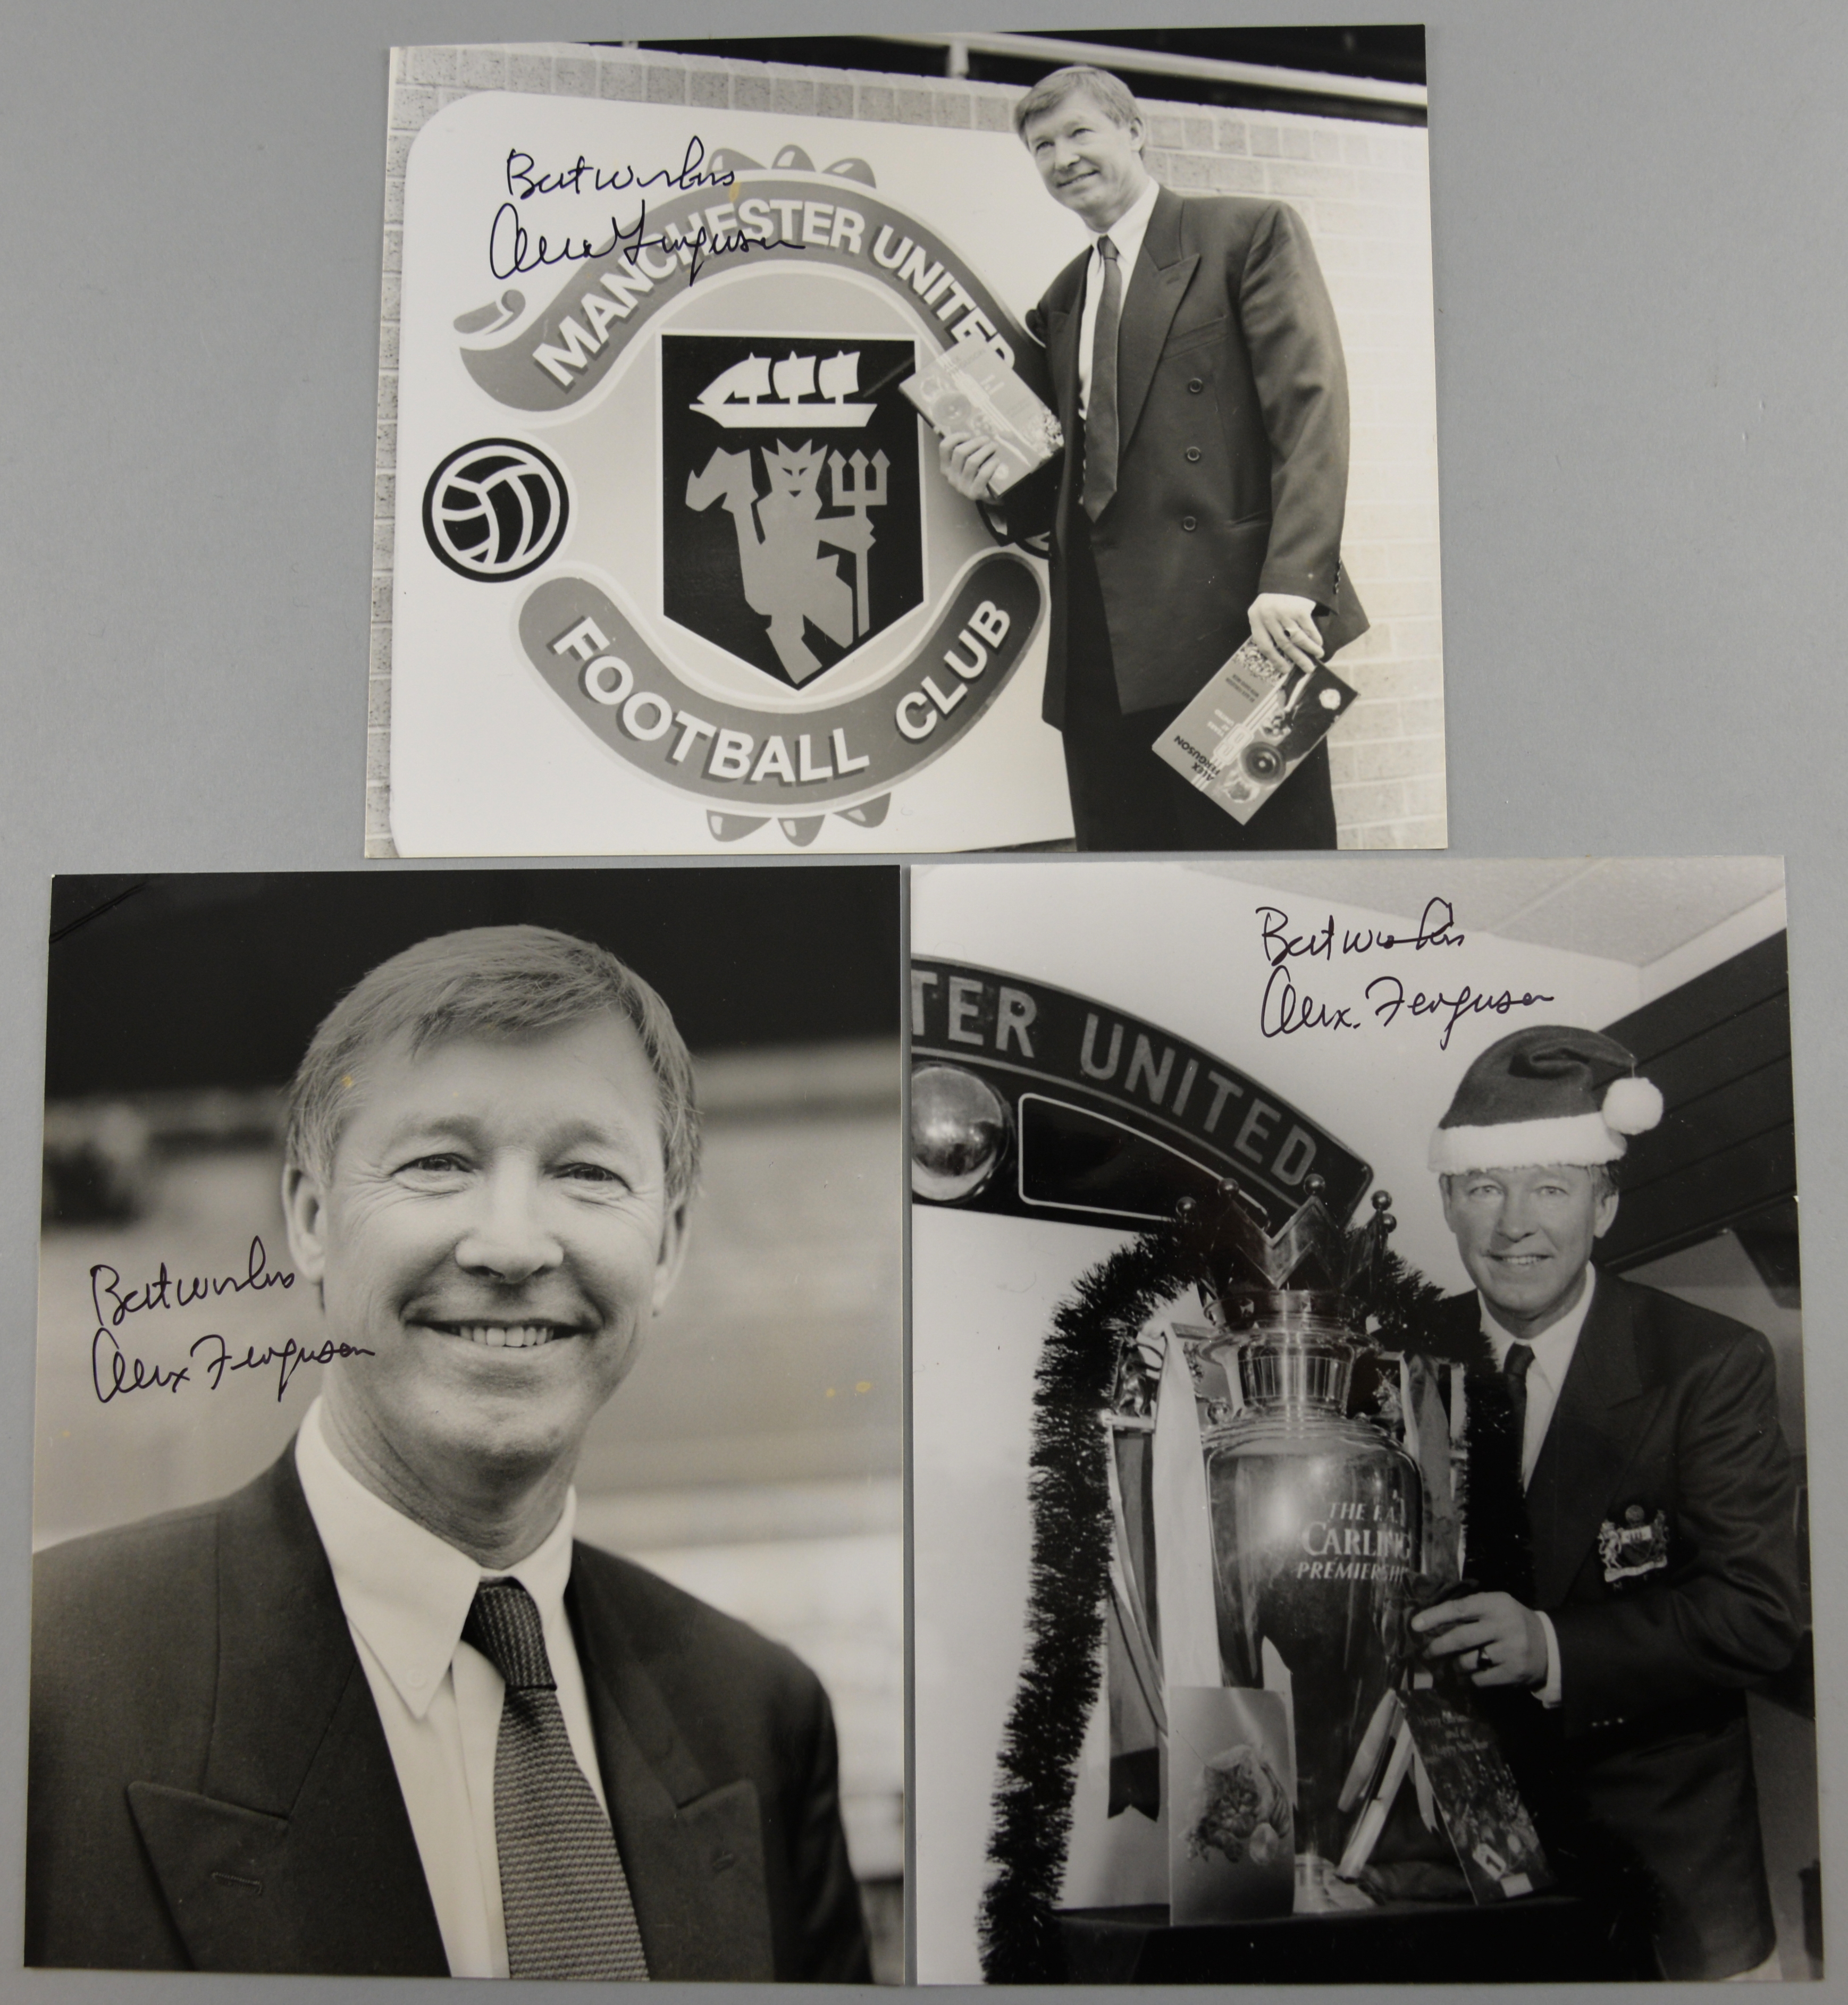 Three signed photographs of Sir Alex Ferguson, one showing Sir Alex Ferguson with the Premiership